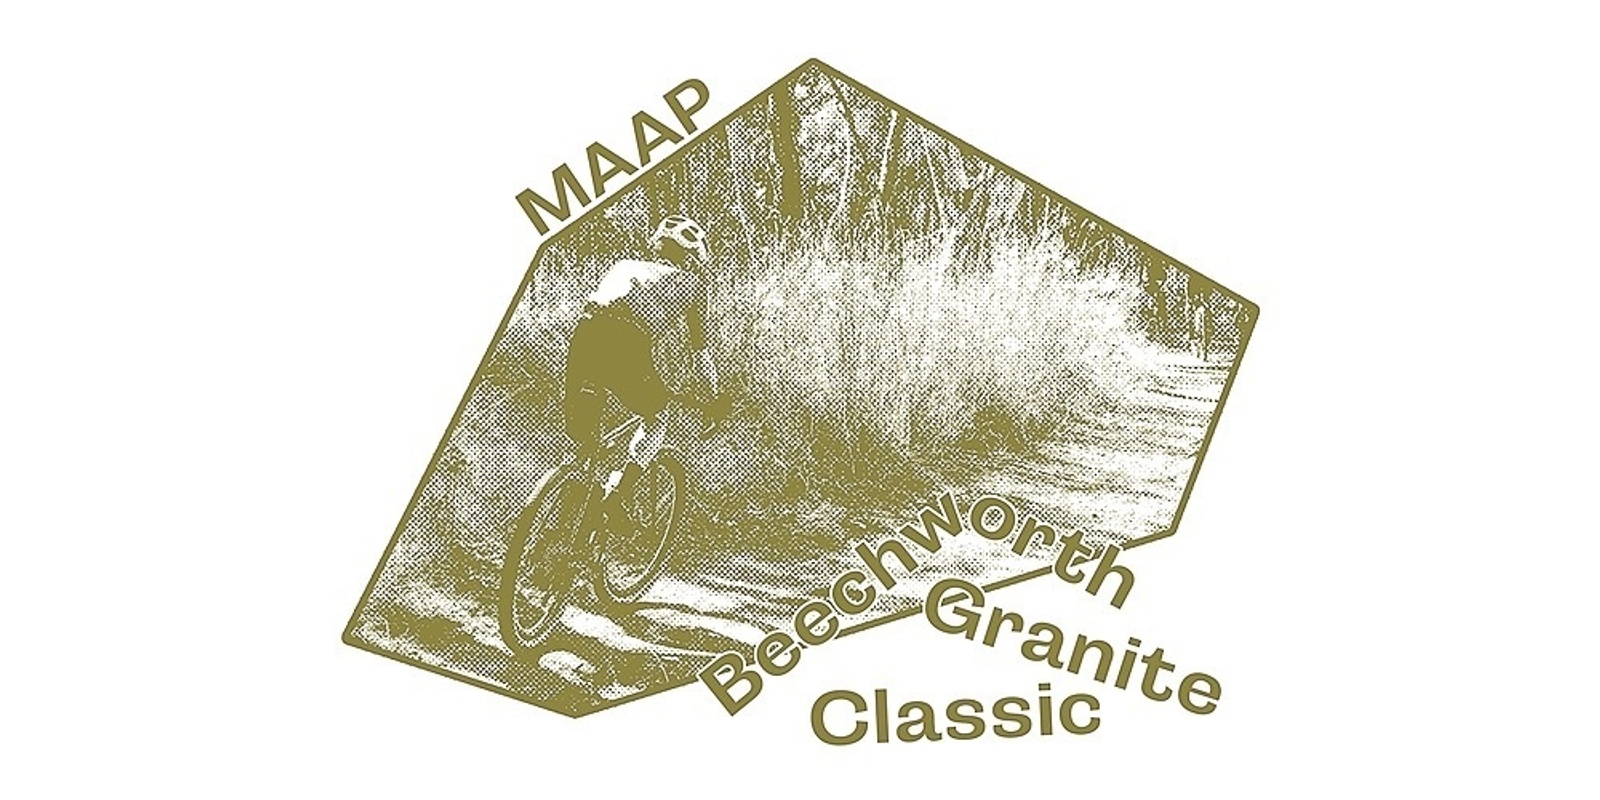 Banner image for MAAP Beechworth Granite Classic